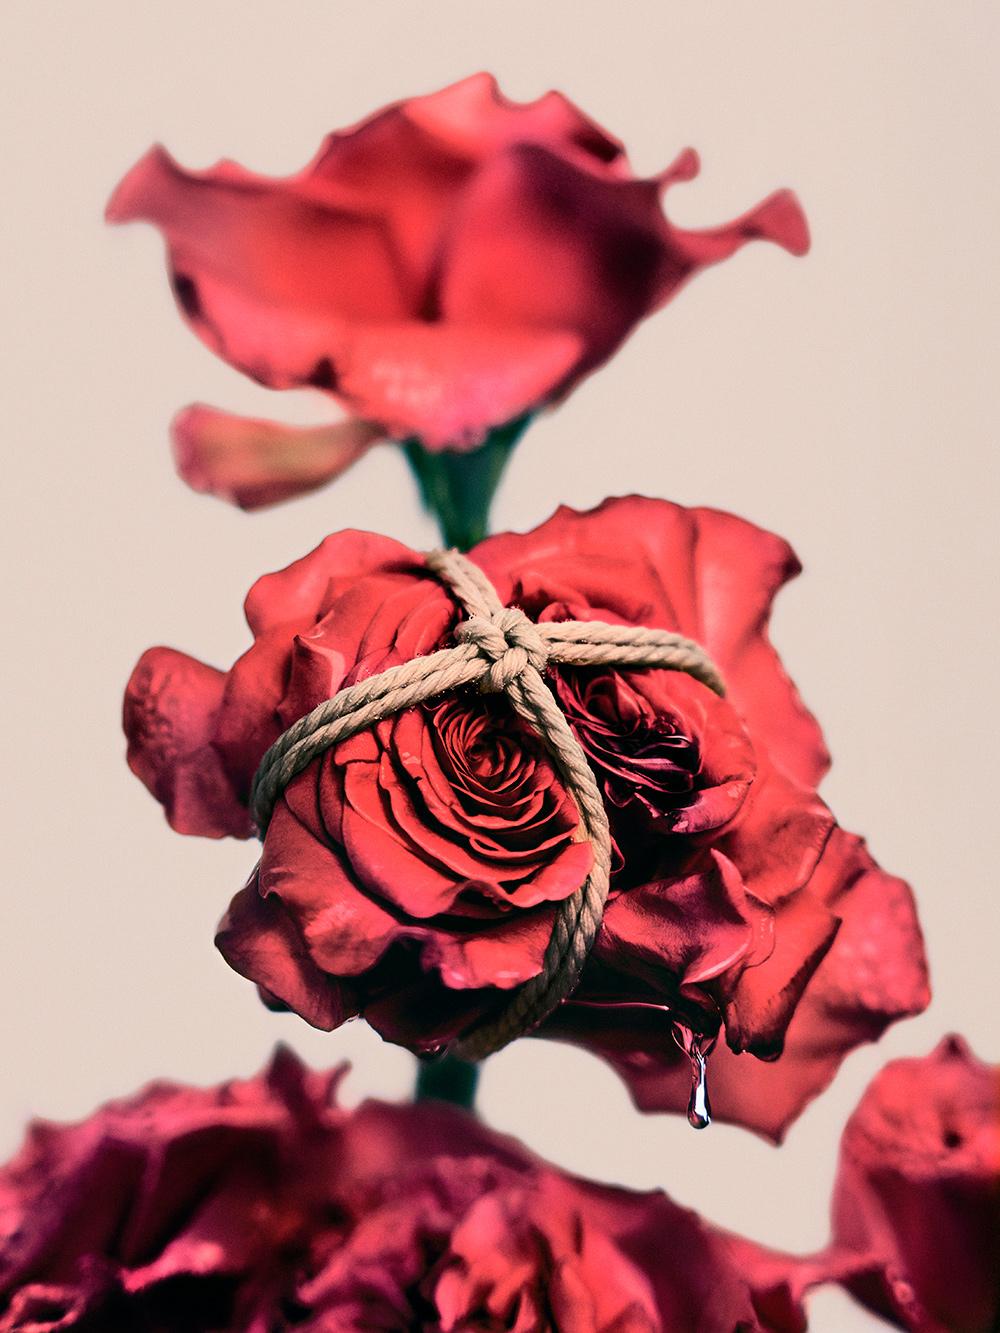 Leonardo Pucci Still-Life Photograph – Roses 1:18 Uhr, Paris